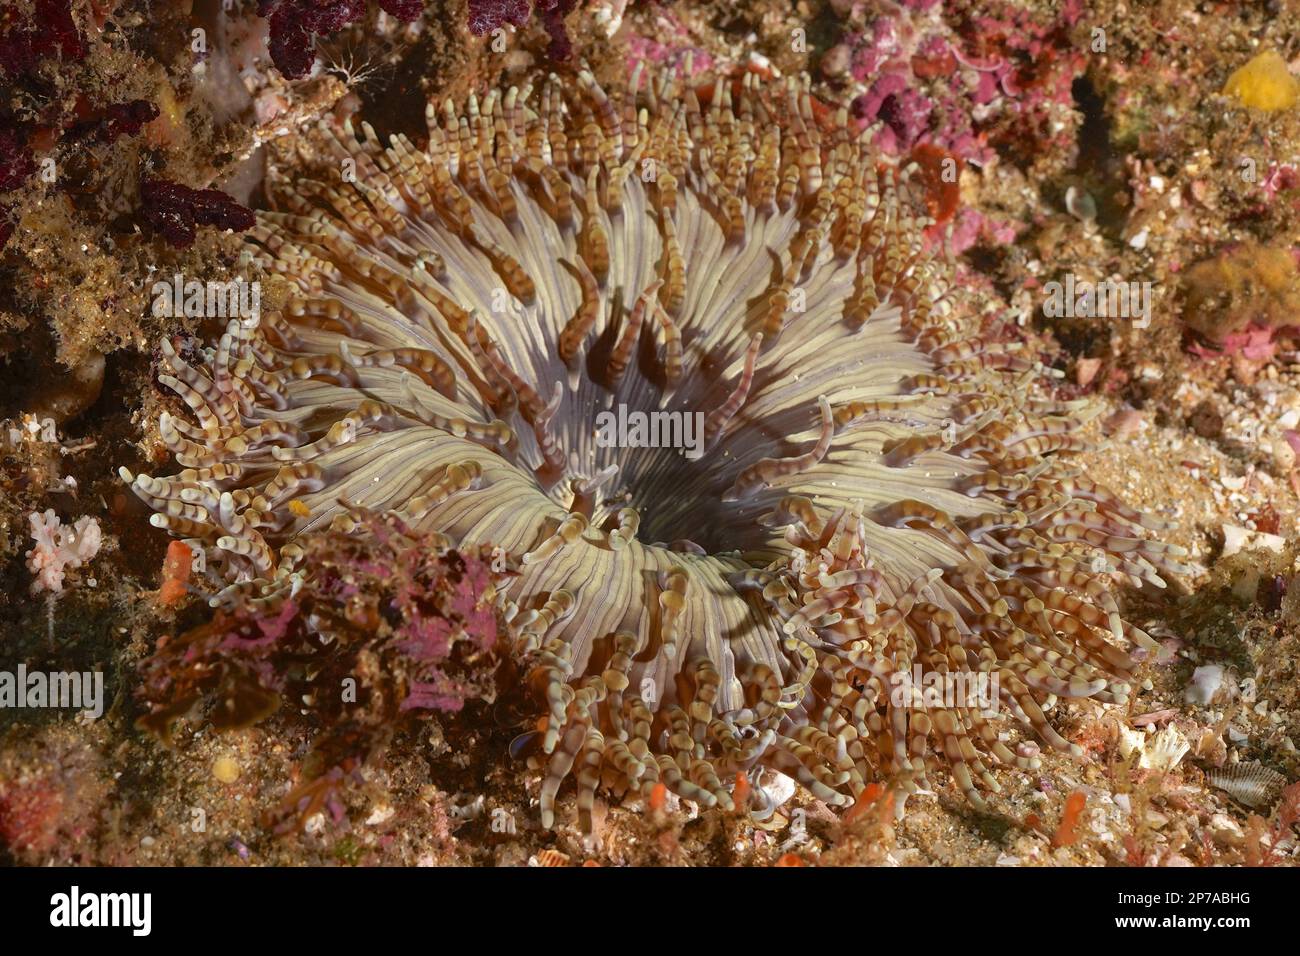 Beaded anemone (Heteractis aurora), Aliwal Shoal dive site, Umkomaas, KwaZulu Natal, South Africa Stock Photo